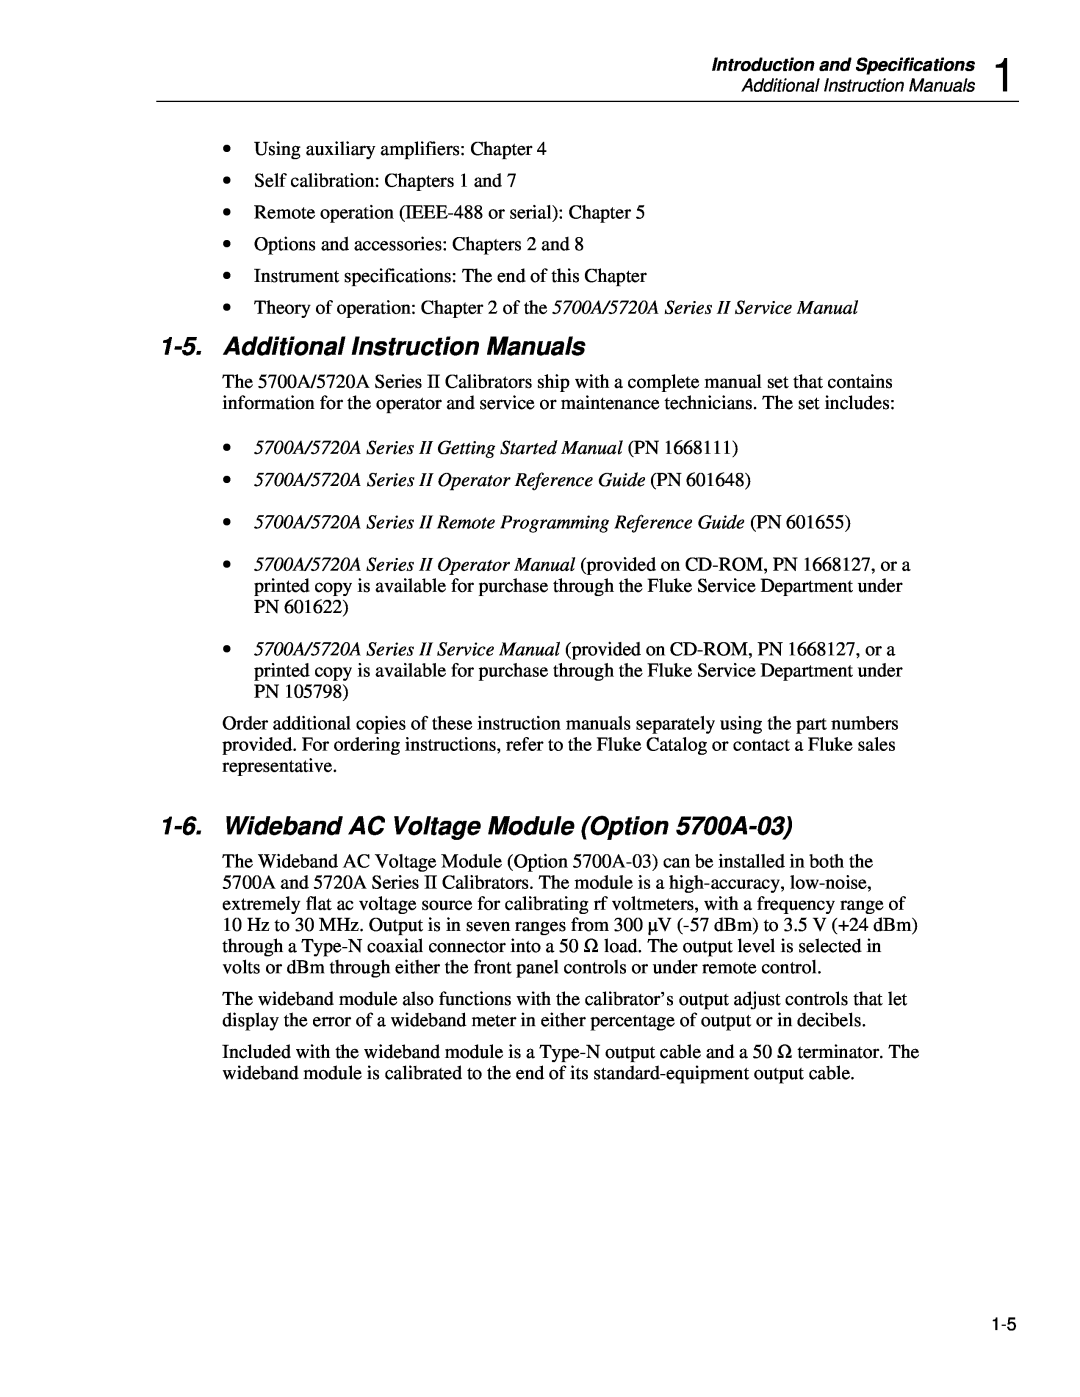 Fluke 5720A service manual Additional Instruction Manuals, Wideband AC Voltage Module Option 5700A-03 